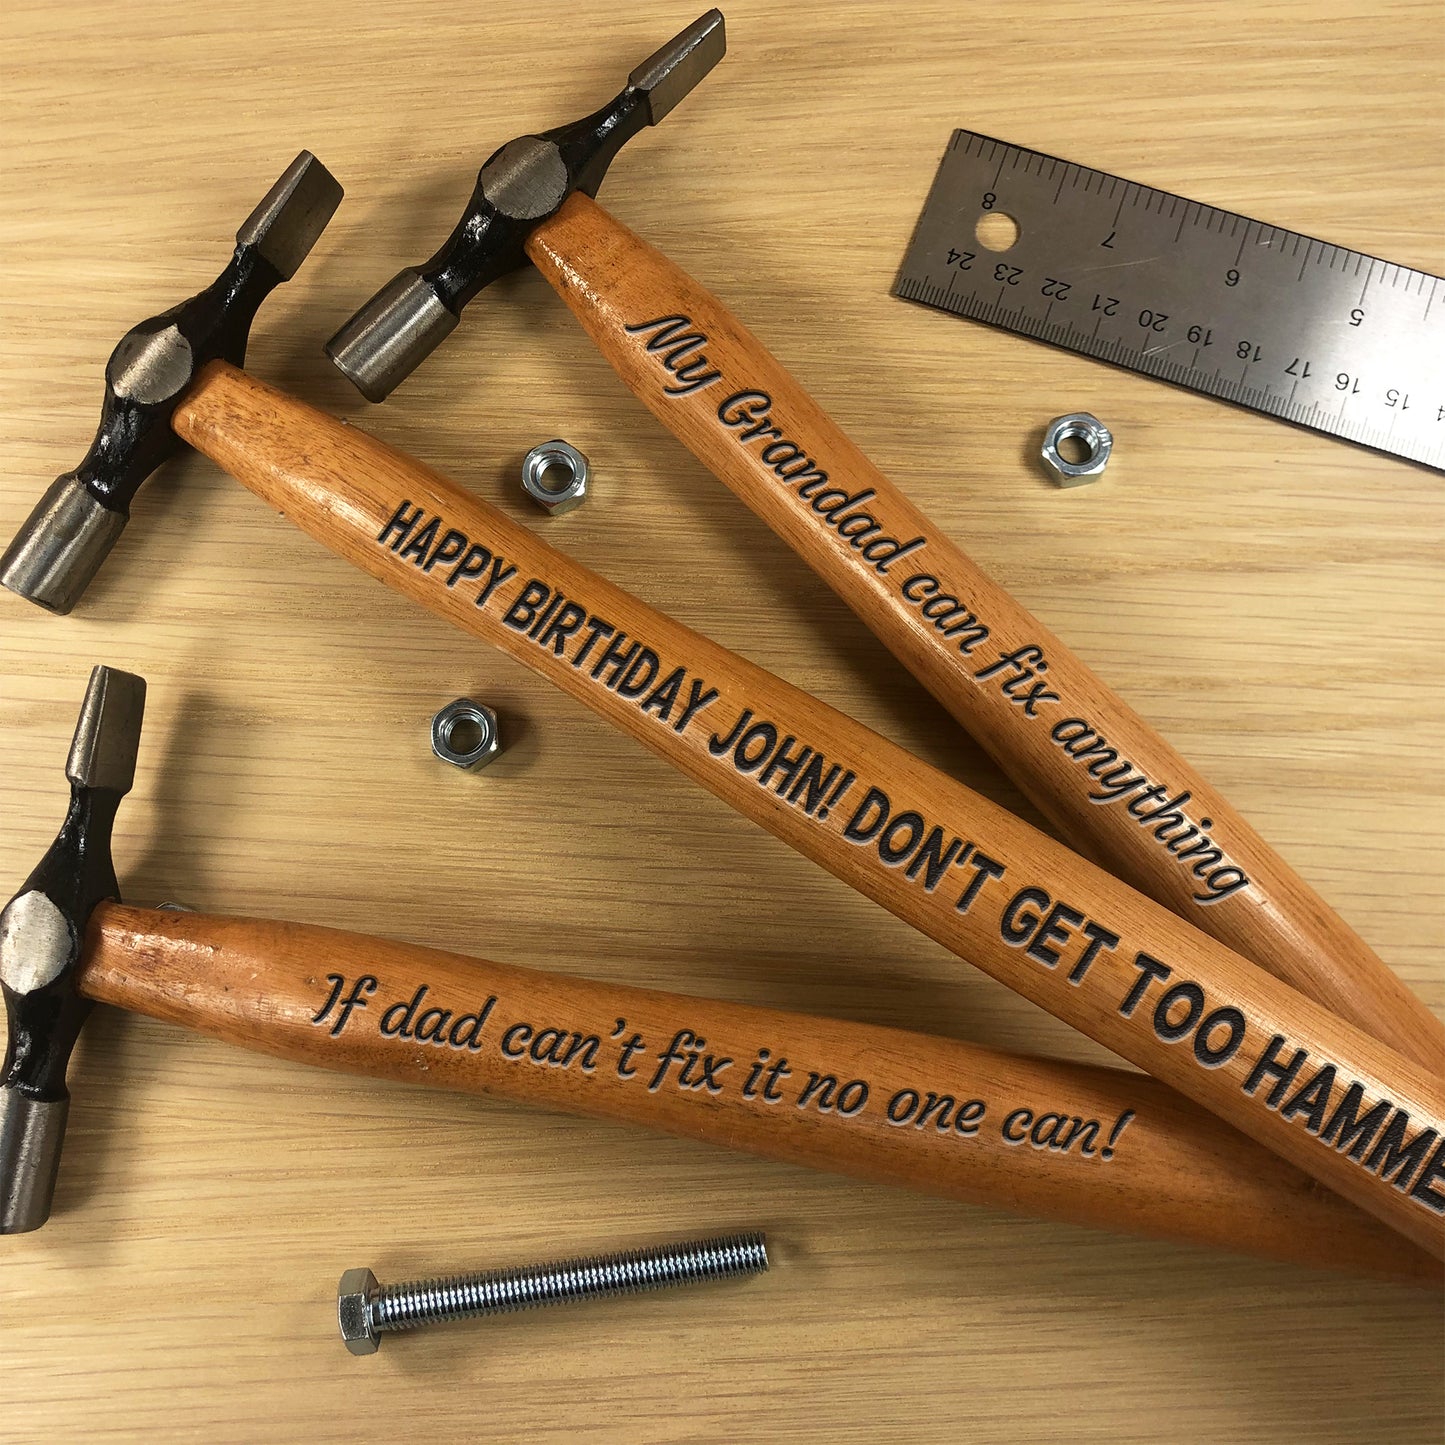 Personalised Funny Engraved Hammer Birthday Gift For Men Novelty